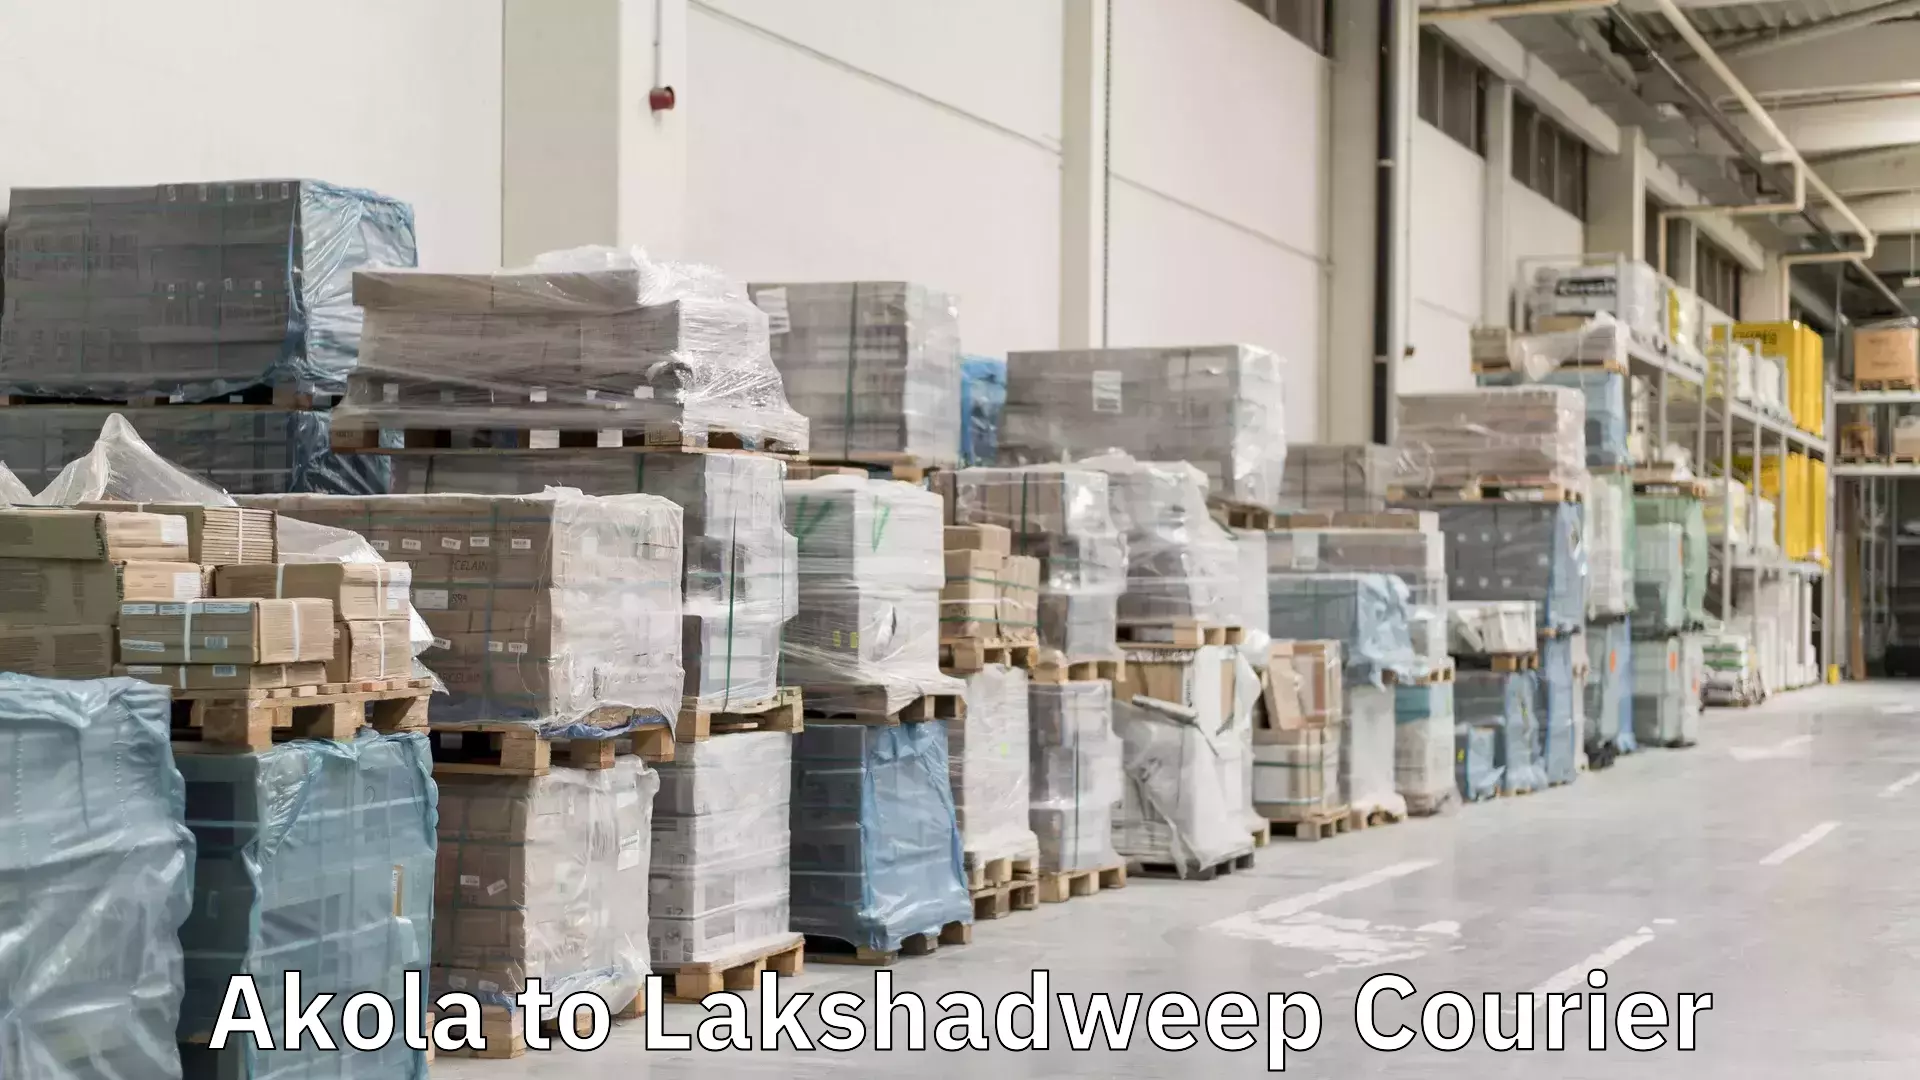 Logistics service provider Akola to Lakshadweep